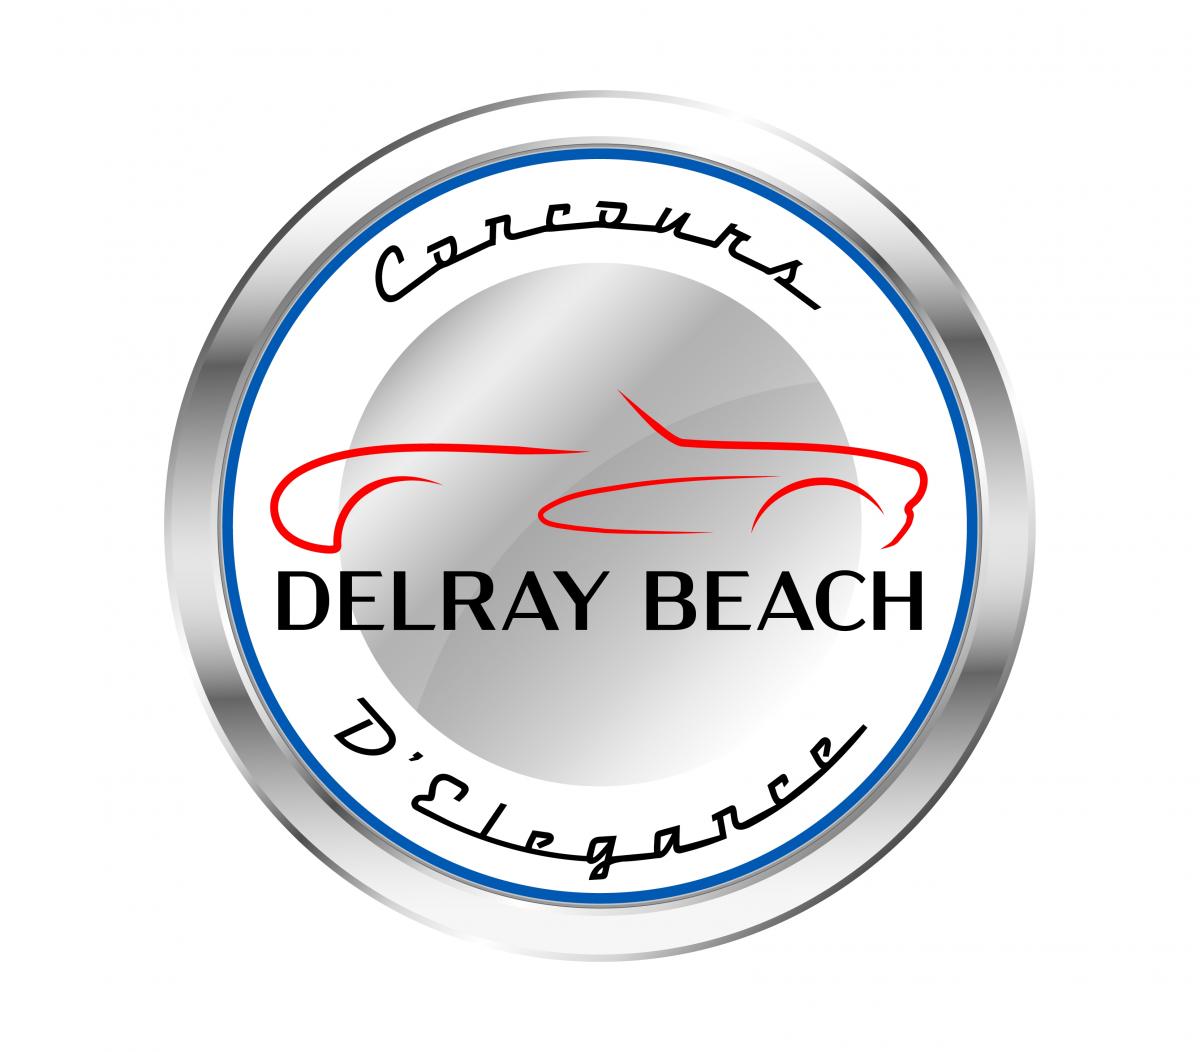 Delray Beach Concours